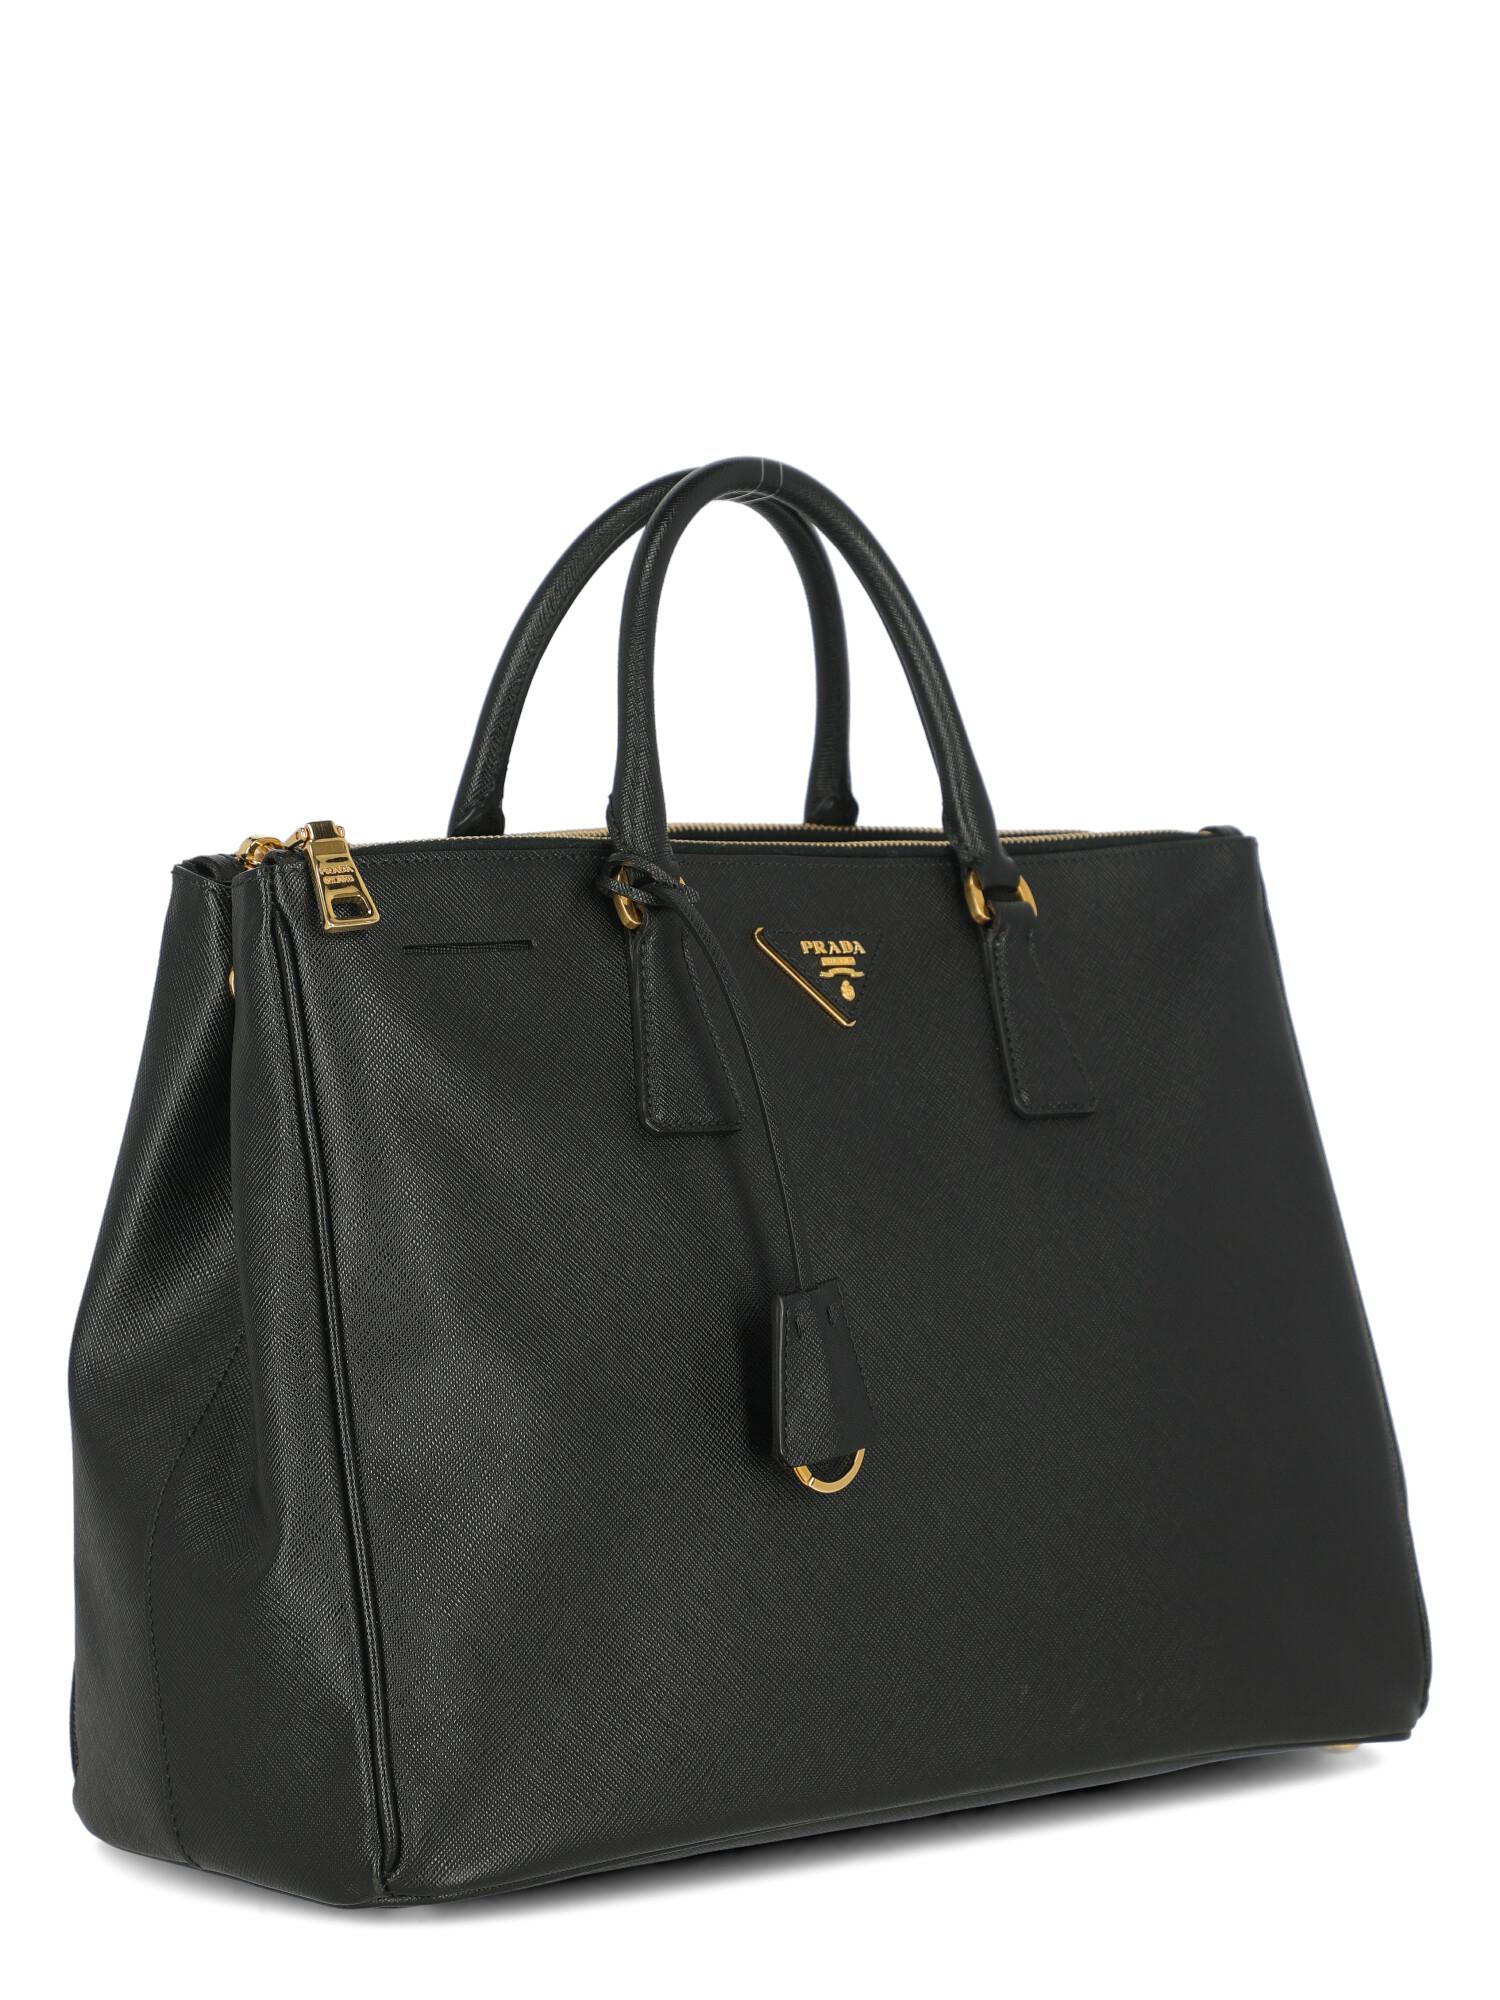 Prada Women  Handbags Galleria Black Leather In Good Condition For Sale In Milan, IT